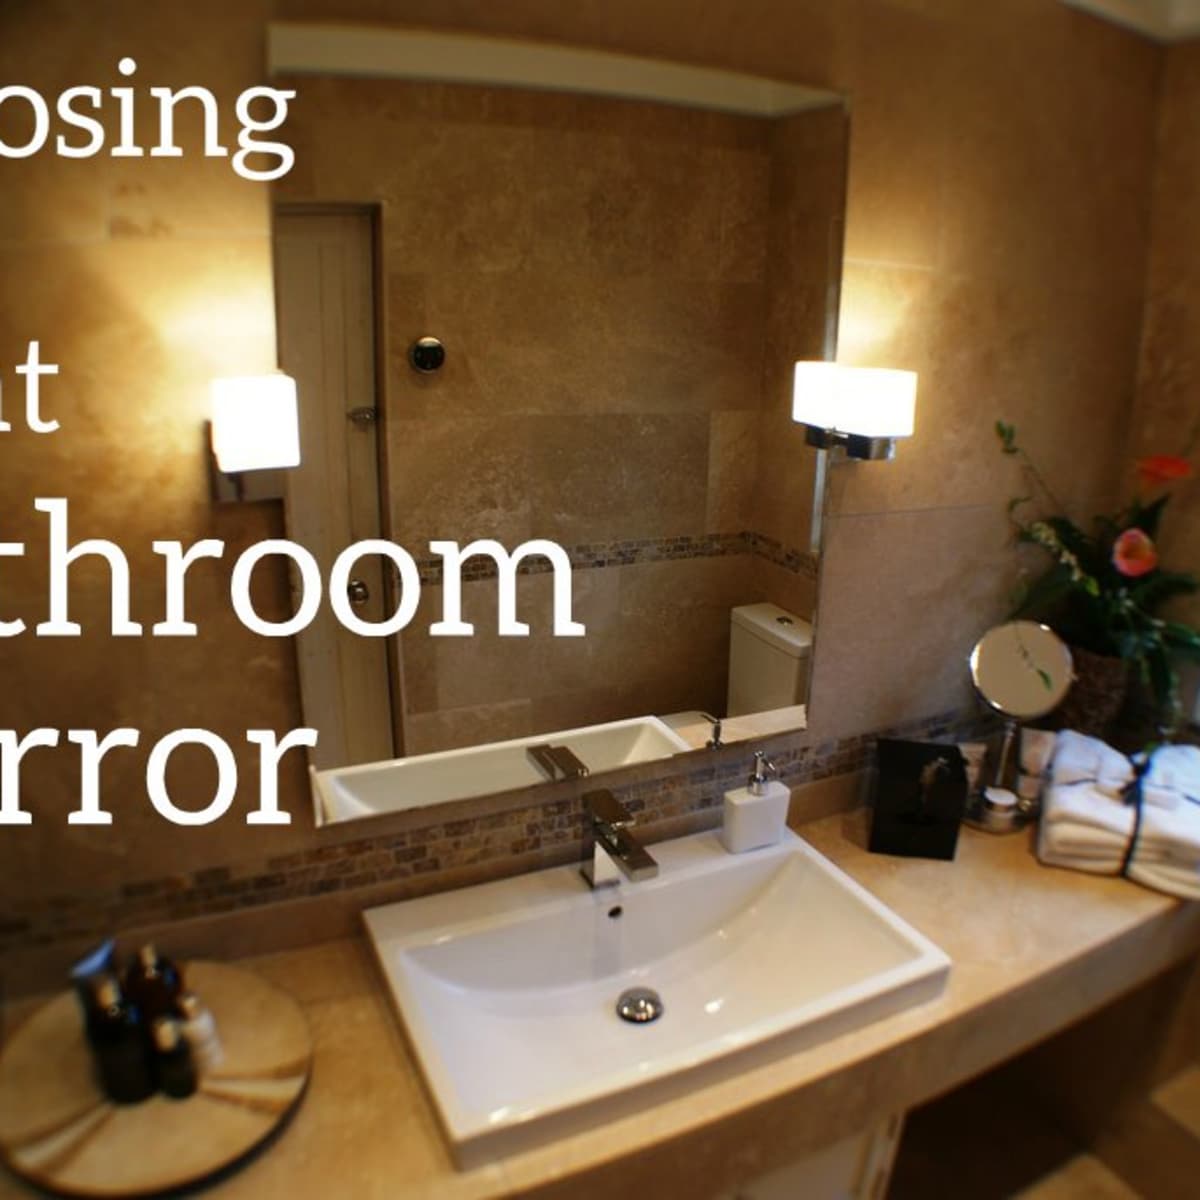 Mirror Above Your Bathroom Vanity, How High To Hang Mirror Above Backsplash